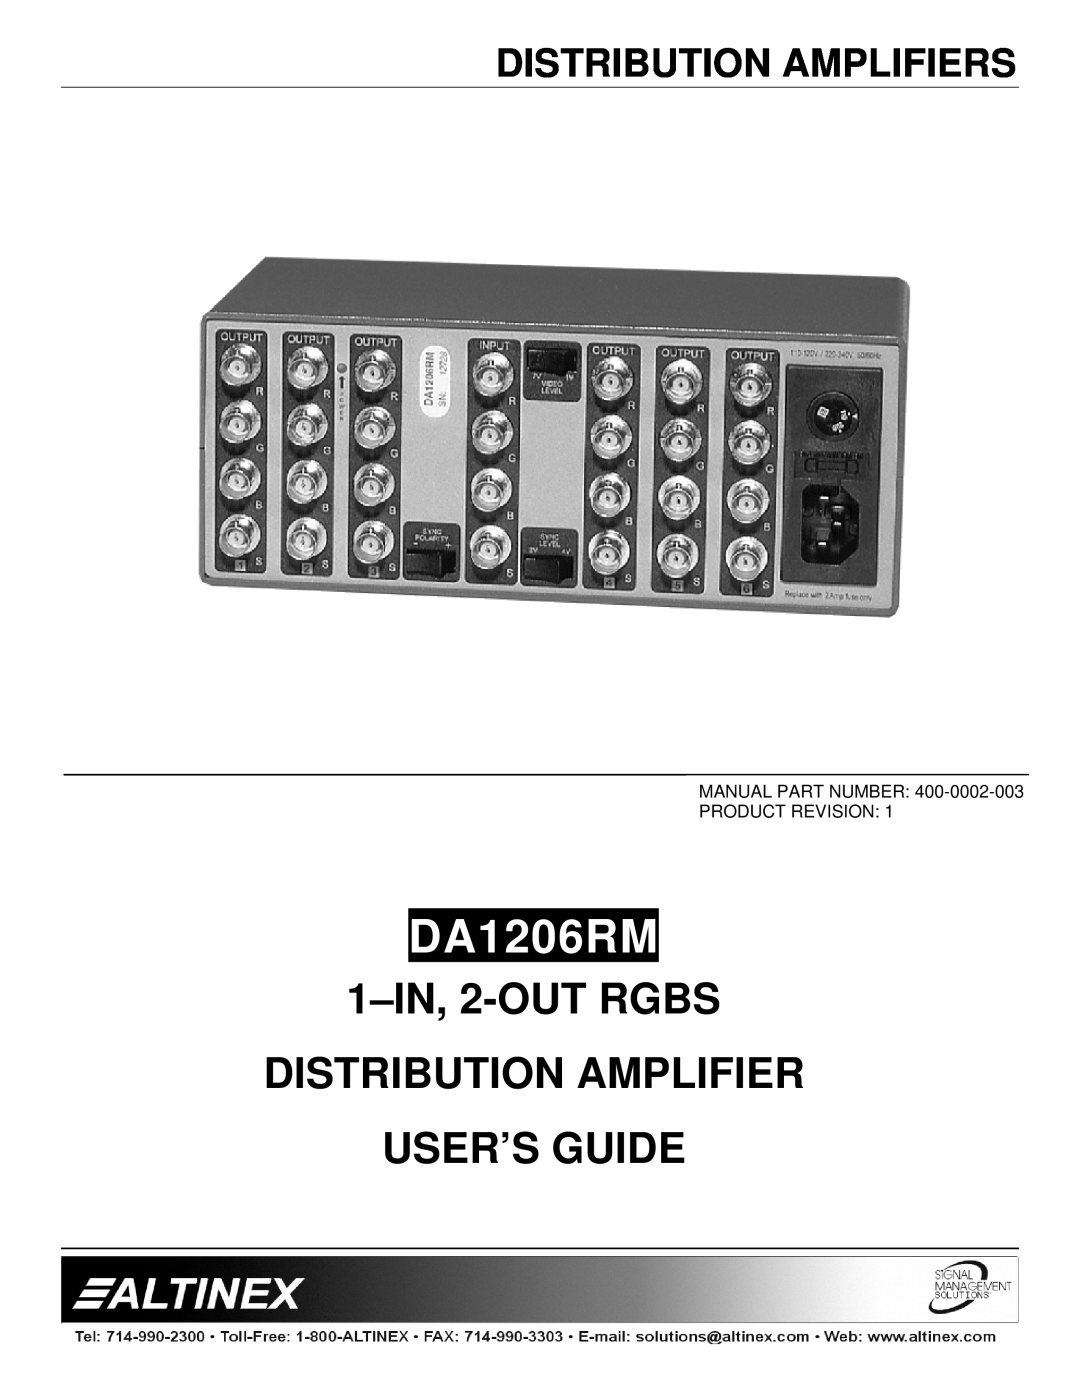 Altinex DA1206RM manual Distribution Amplifiers, 1-IN, 2-OUTRGBS DISTRIBUTION AMPLIFIER, User’S Guide 